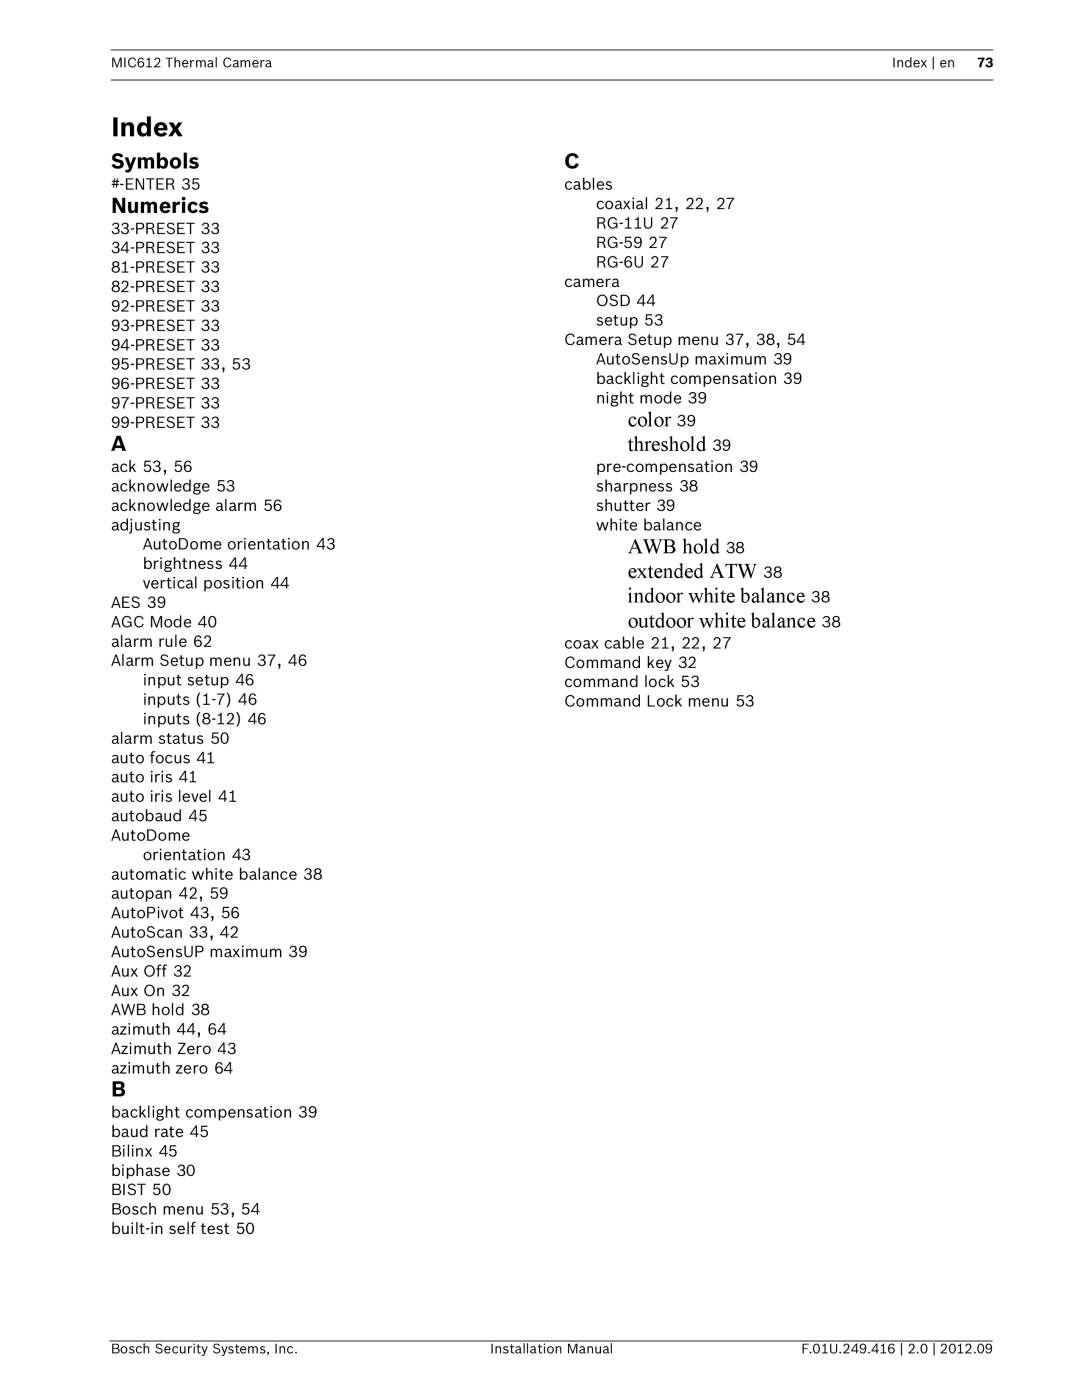 Bosch Appliances MIC612 installation manual Index, Symbols, Numerics, color 39 threshold 